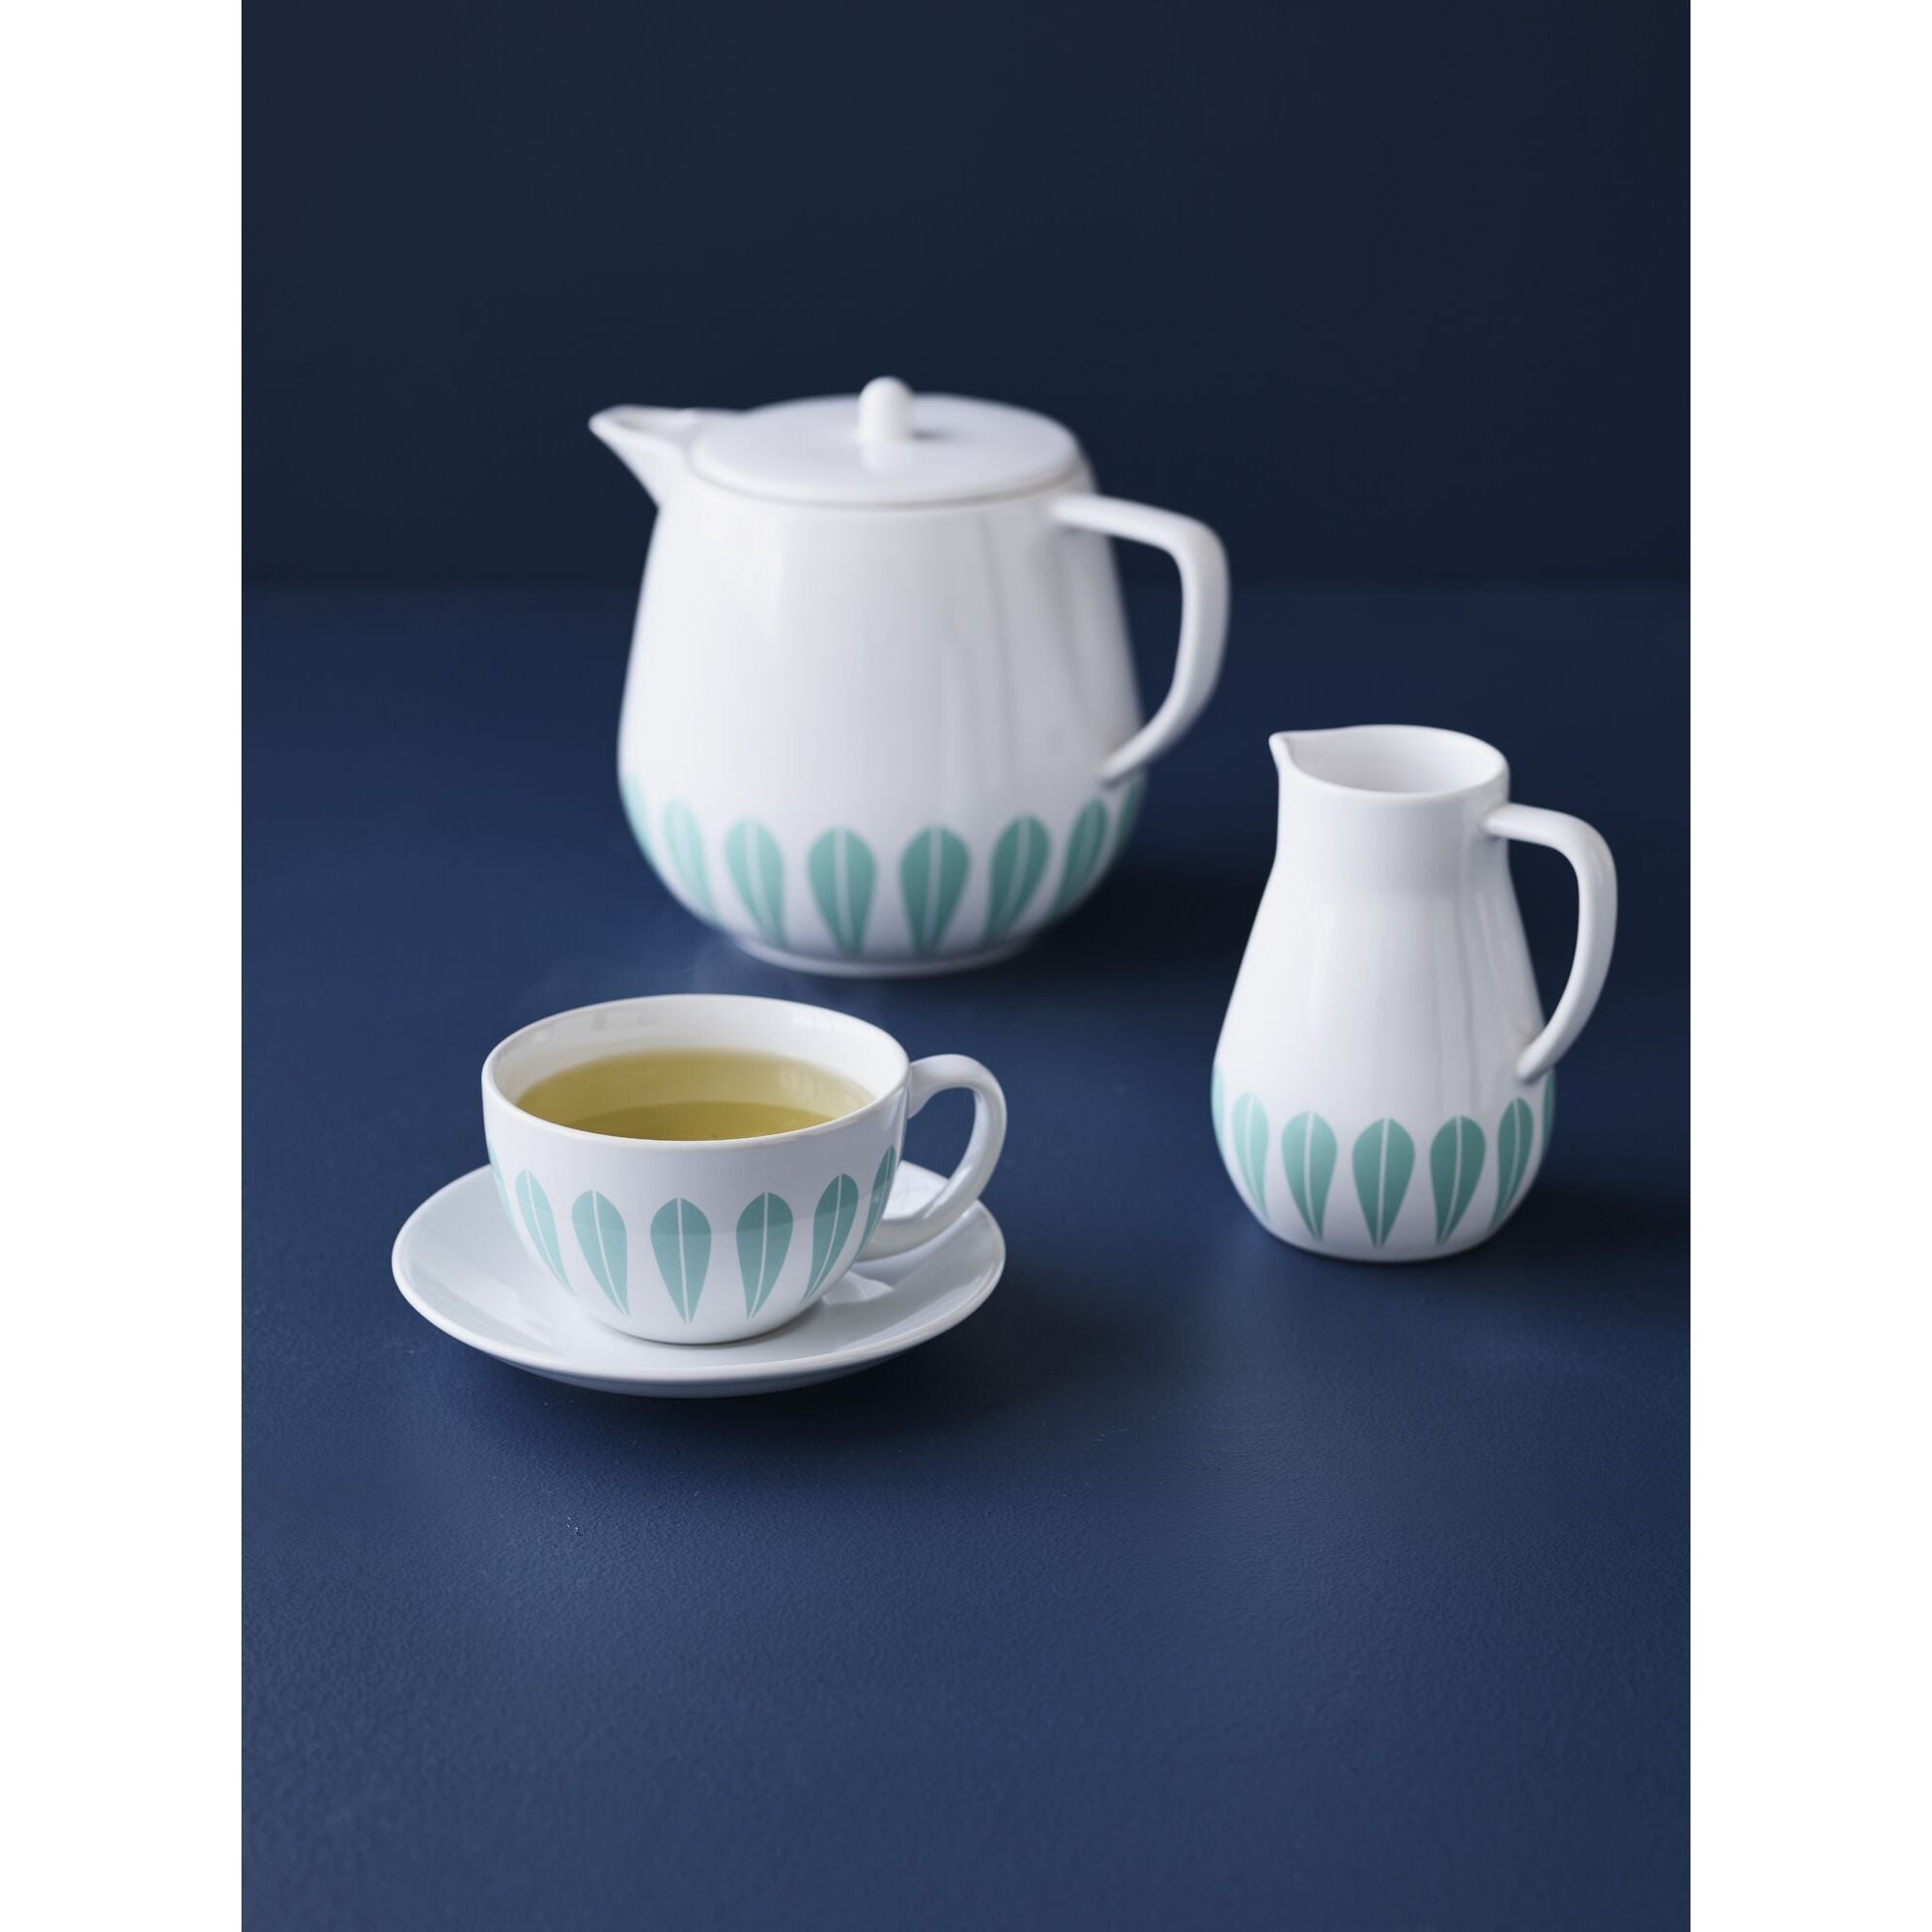 Lucie Kaas Arne Clausen Collection Teapot, ciemnoniebieski